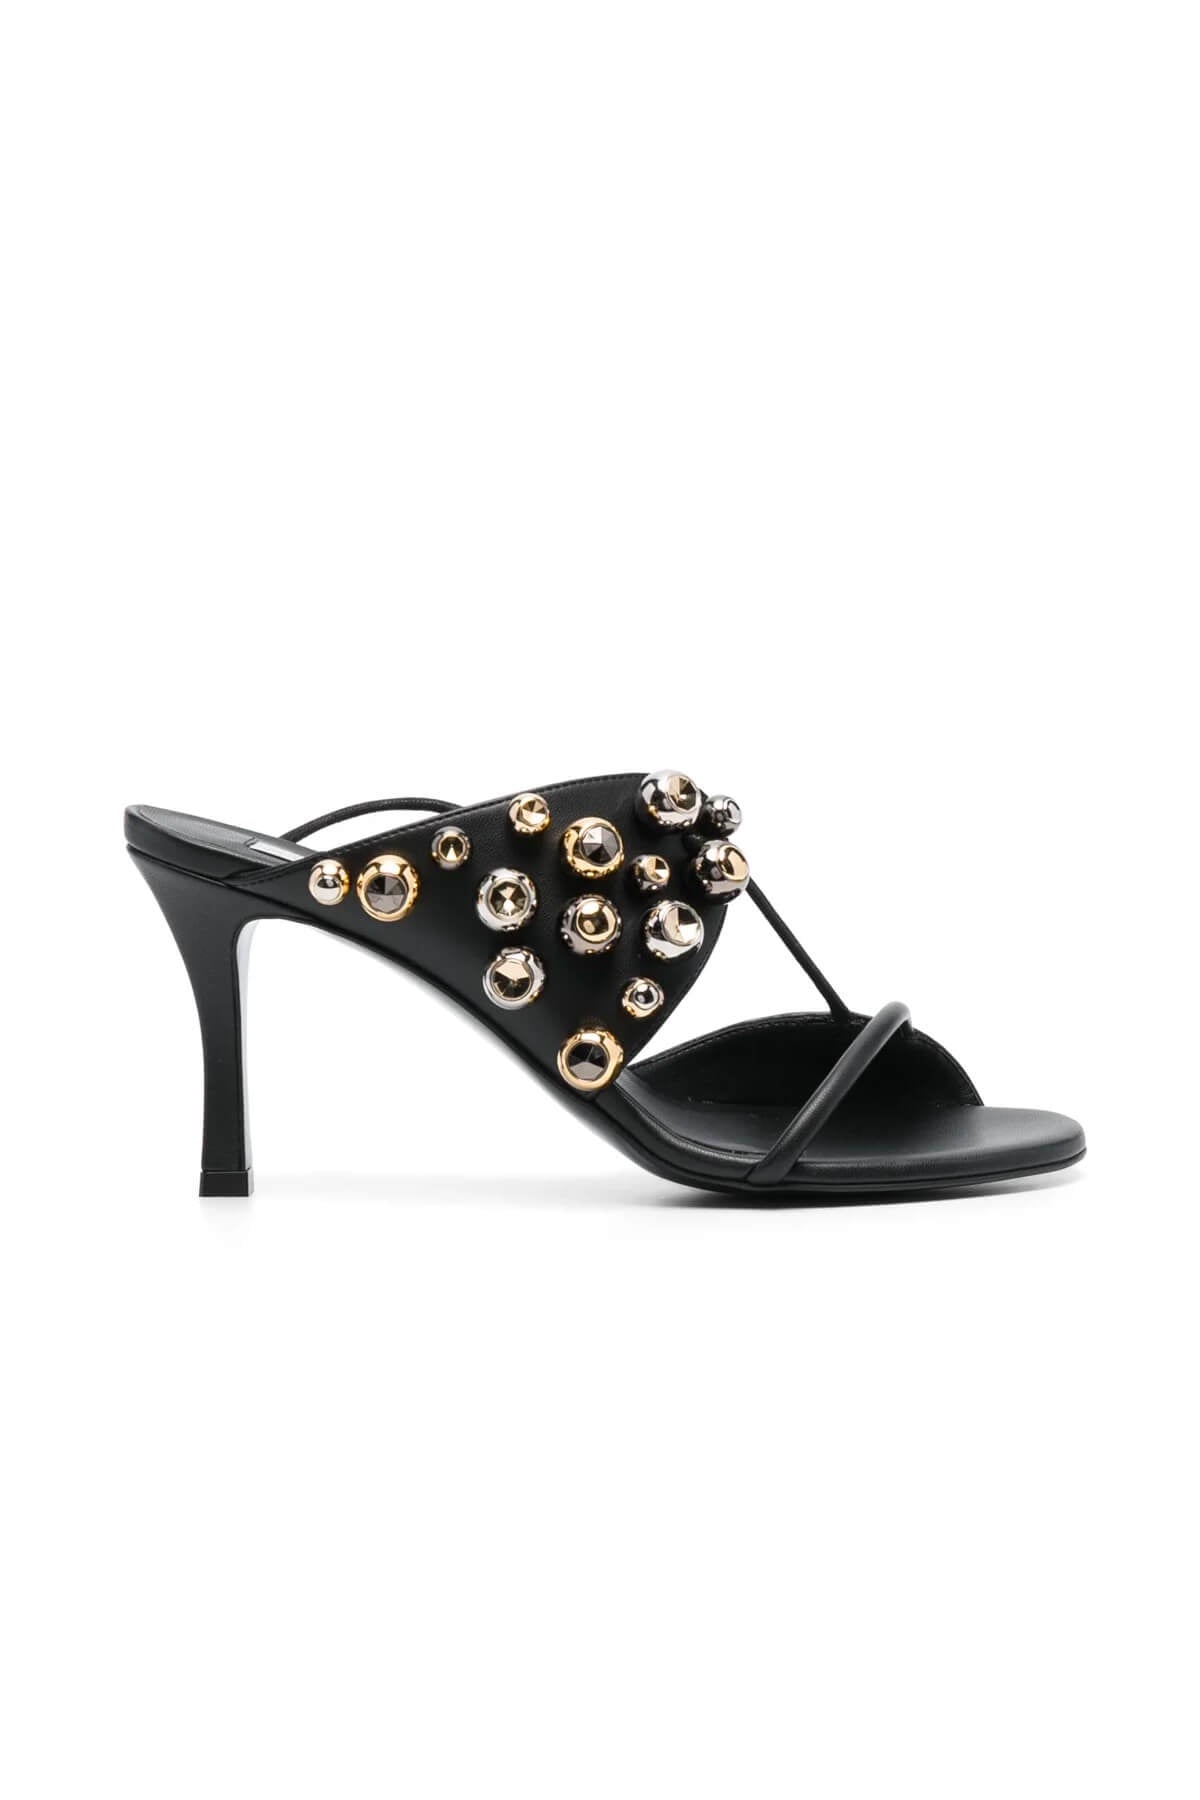 Laciann Sandal – Rebecca Minkoff | Leather heels sandals, Black sandals  heels, Simple sandals